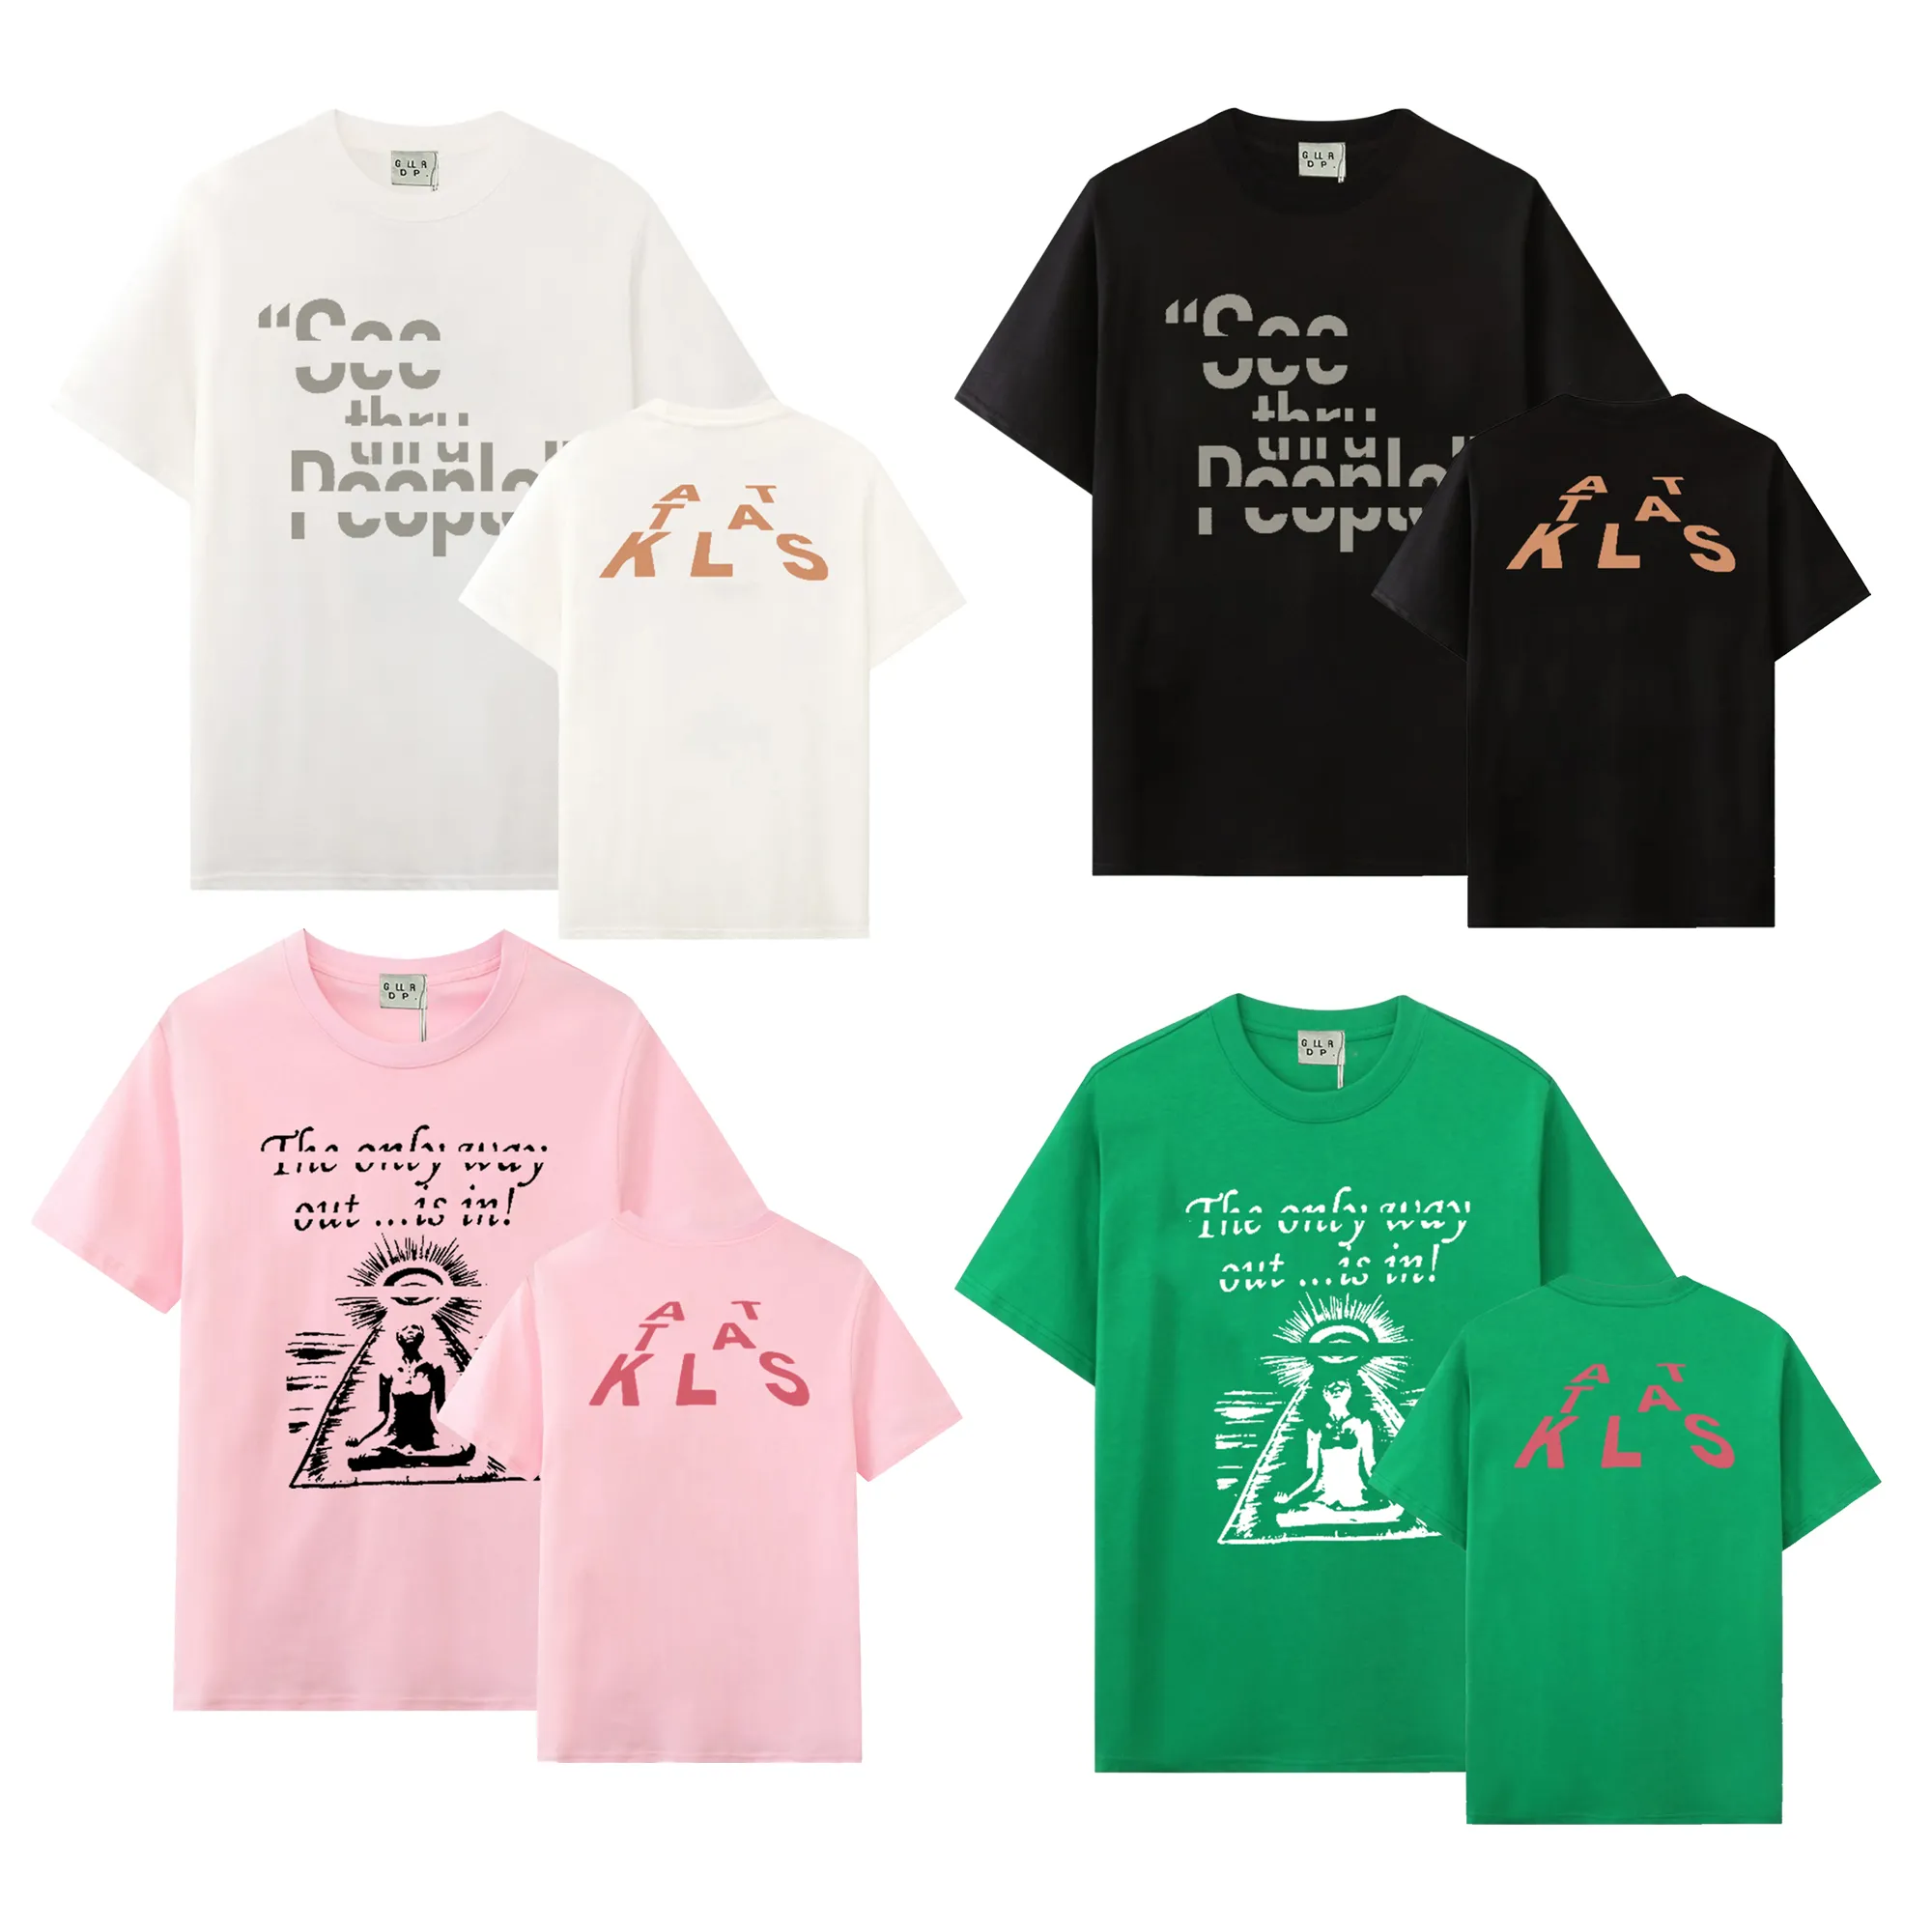 23ss Designer de Gallerie Tees Camisetas Moda de Luxo Camisetas Mens Mulheres Tees Marca Manga Curta Hip Hop Streetwear Tops Roupas Tamanho D-18 Tamanho XS-XL